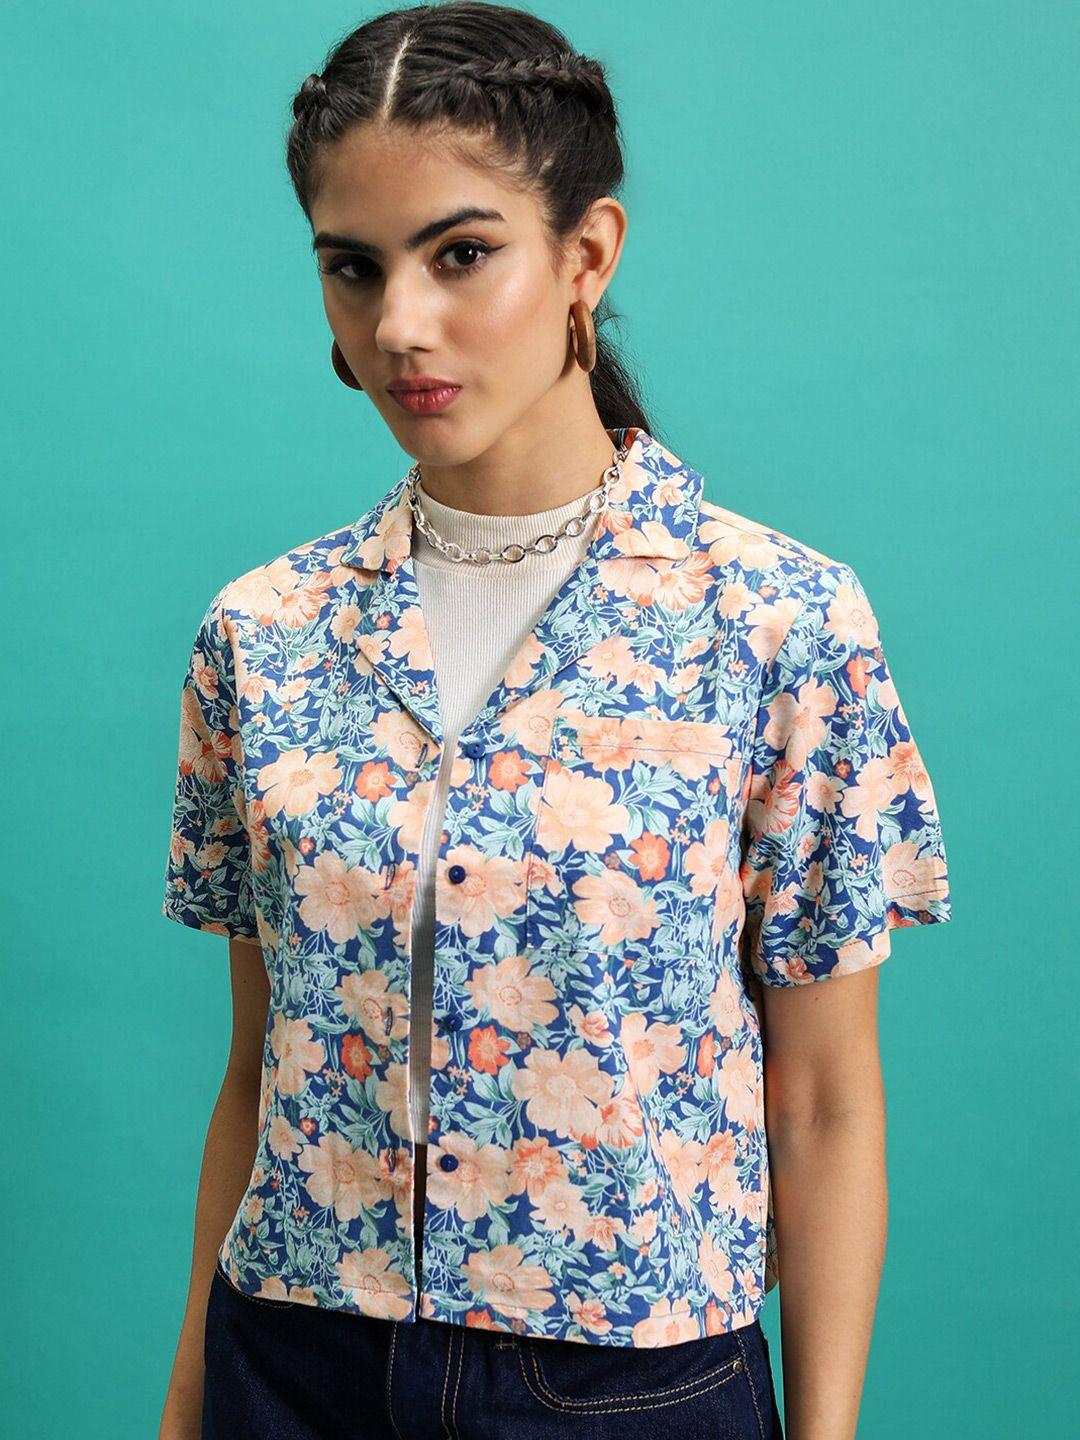 tokyo talkies shirt collar short sleeves floral print cotton shirt style top